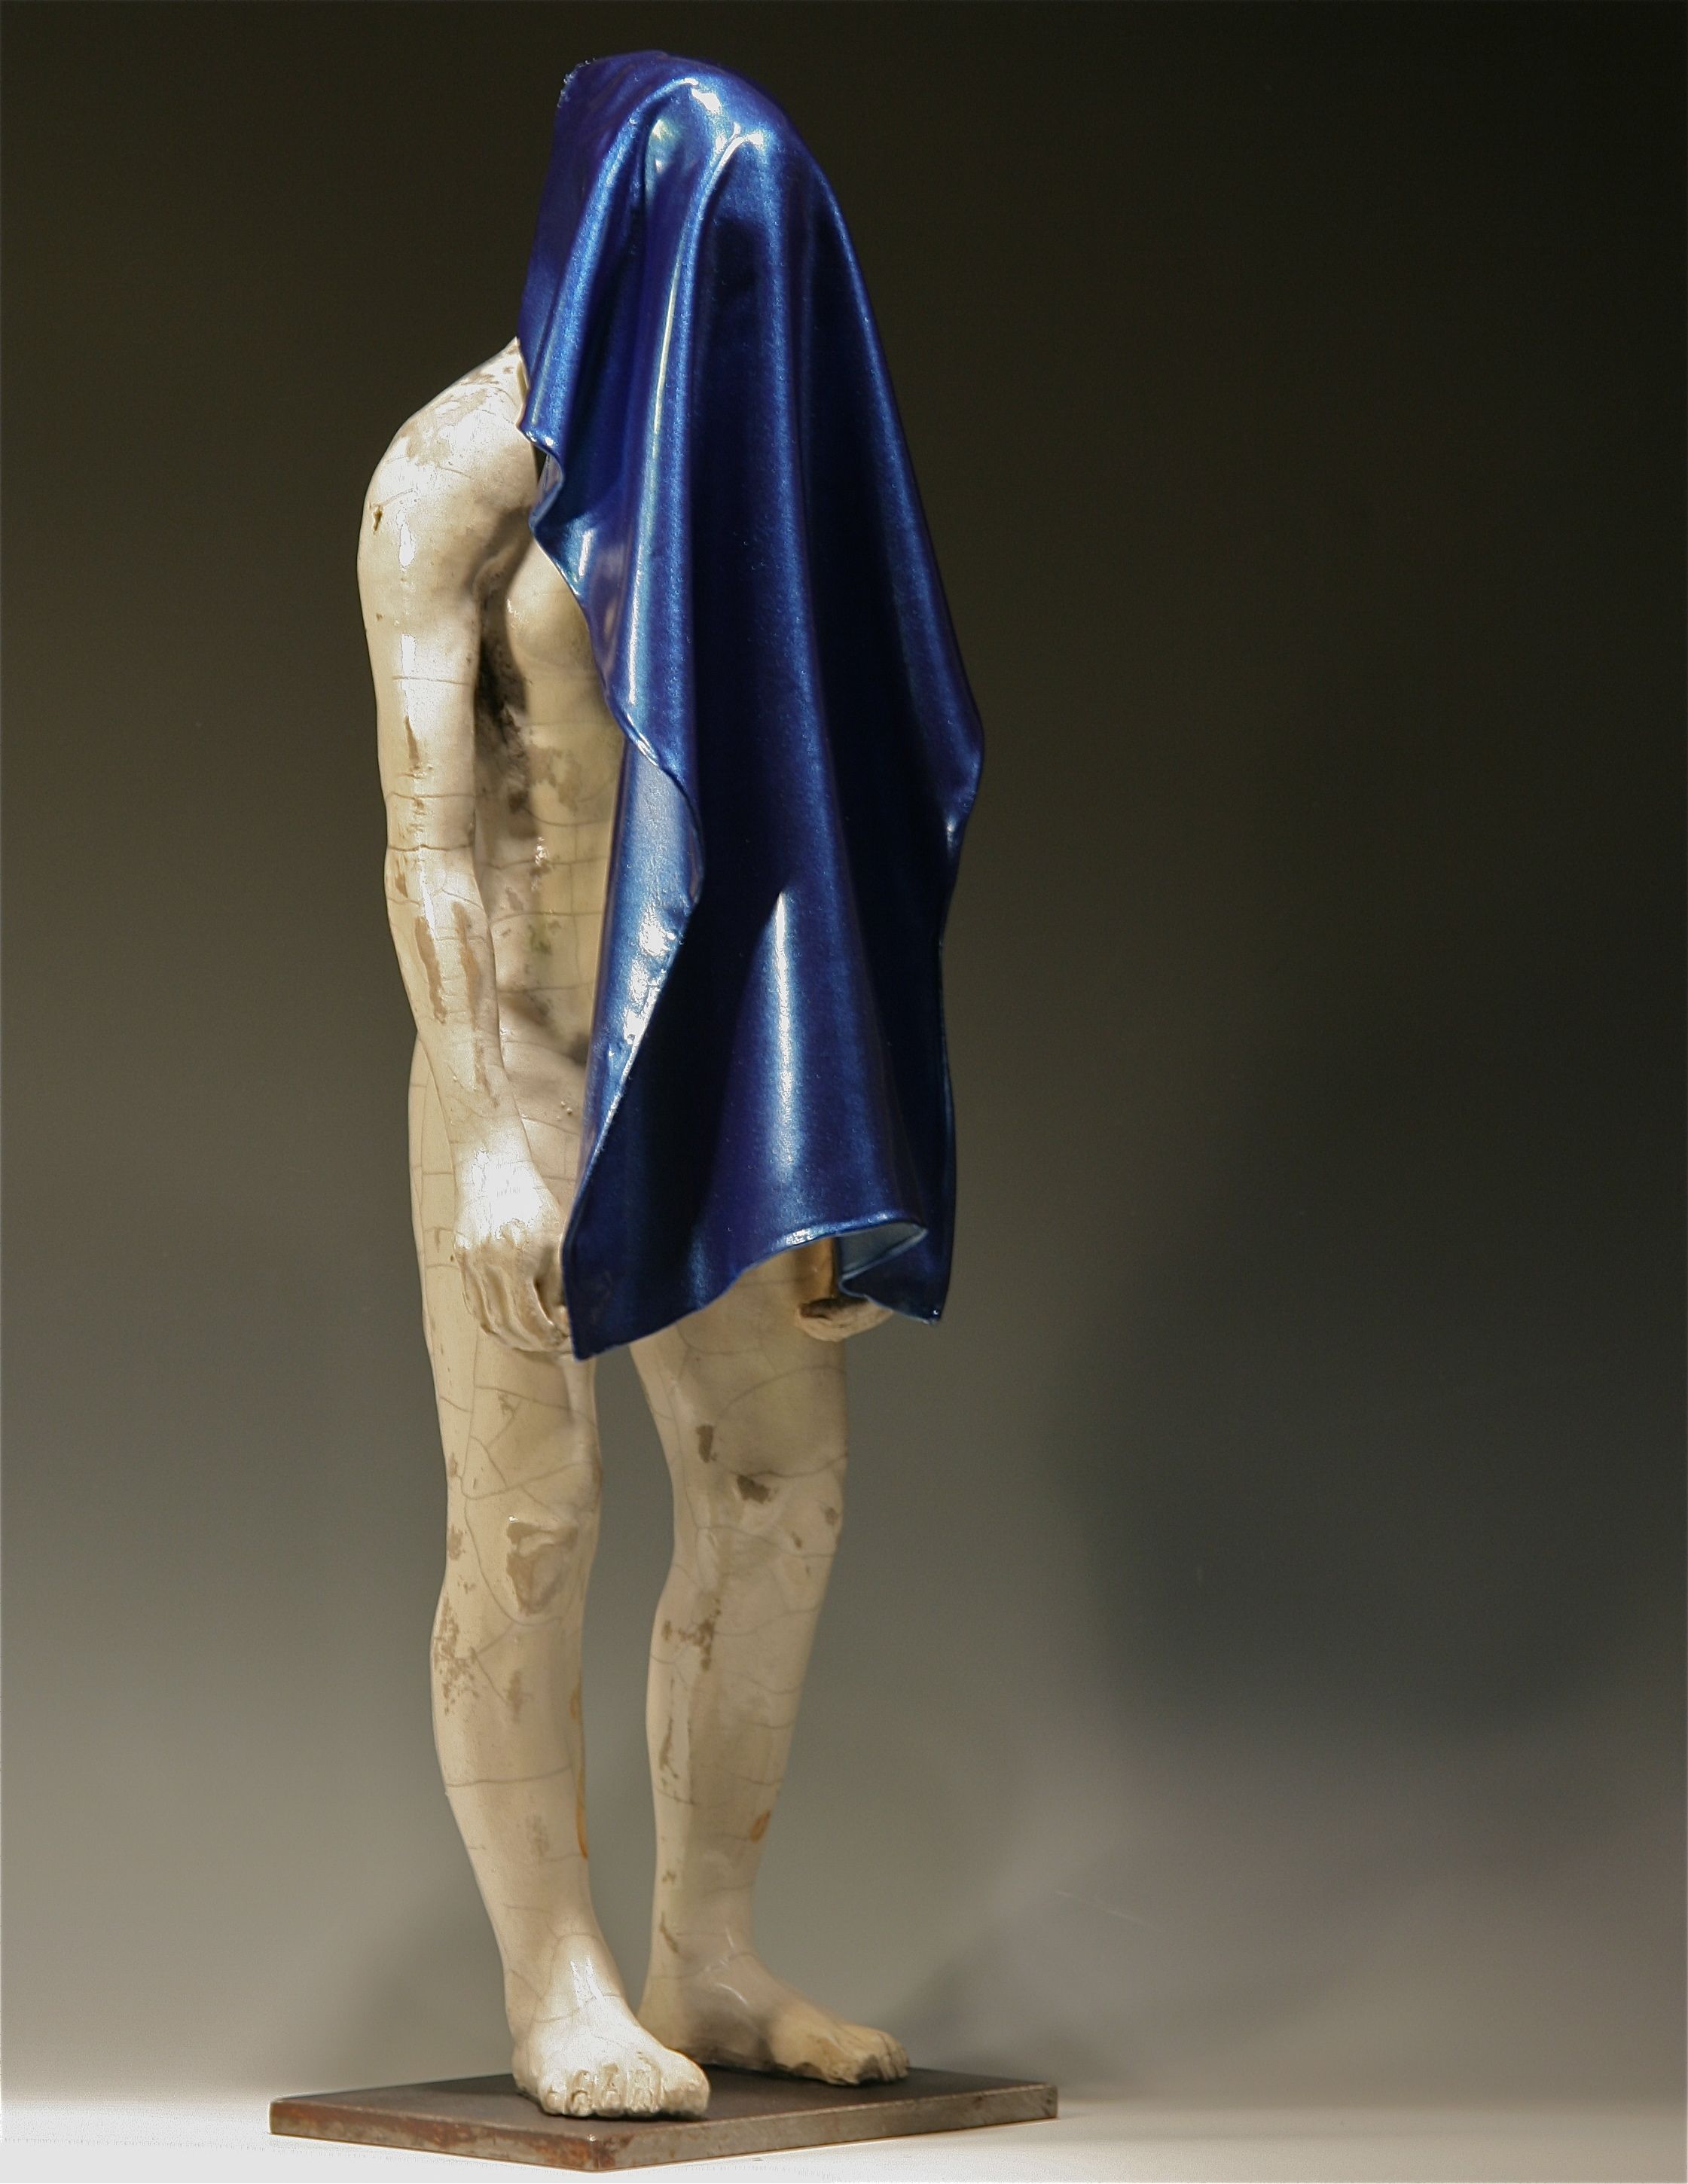   2011 (Man with Blue Towel)  23"H, raku-fired stoneware, linen, polymers, paint 